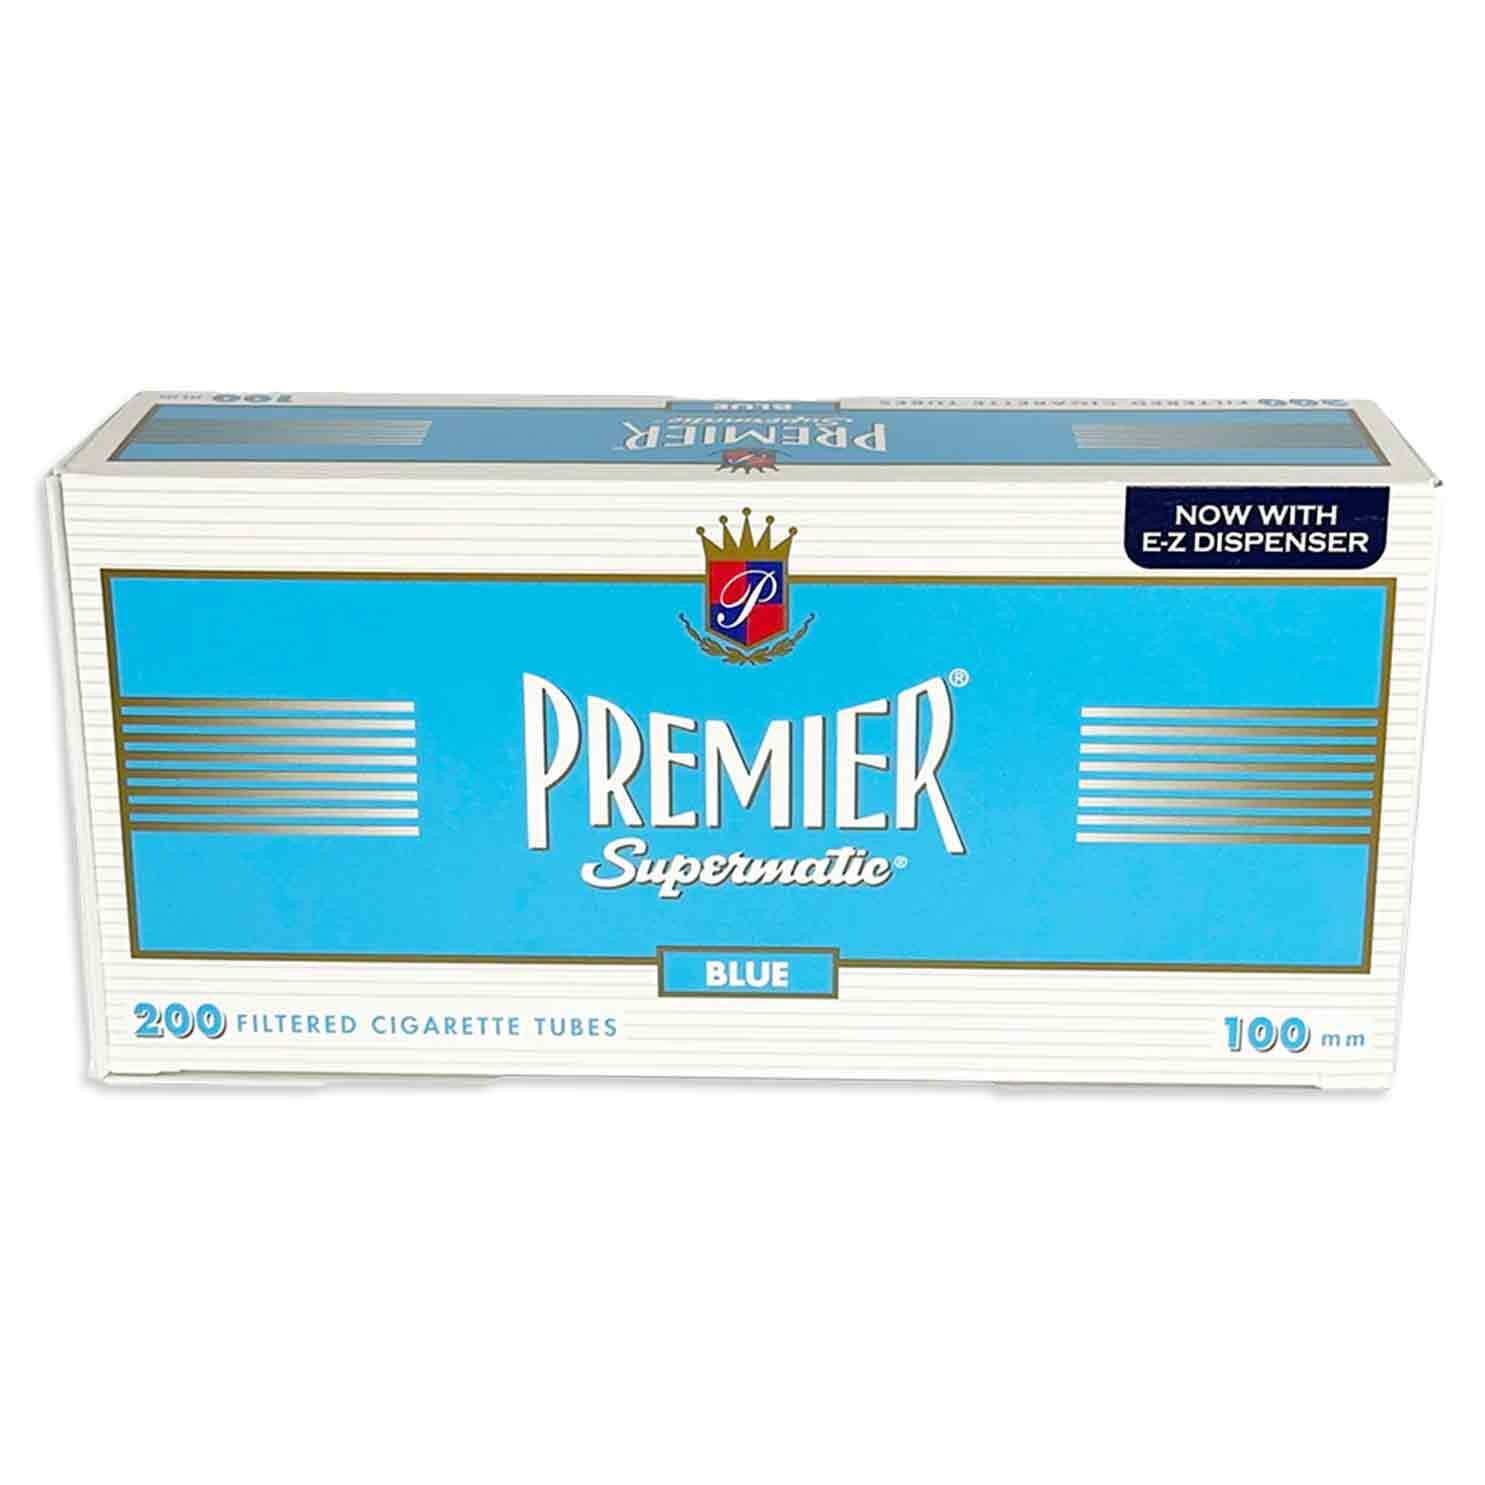 PREMIER Blue Cigarette Tubes - 100mm Size Filter Tubes (1 Box of 200 Tubes)